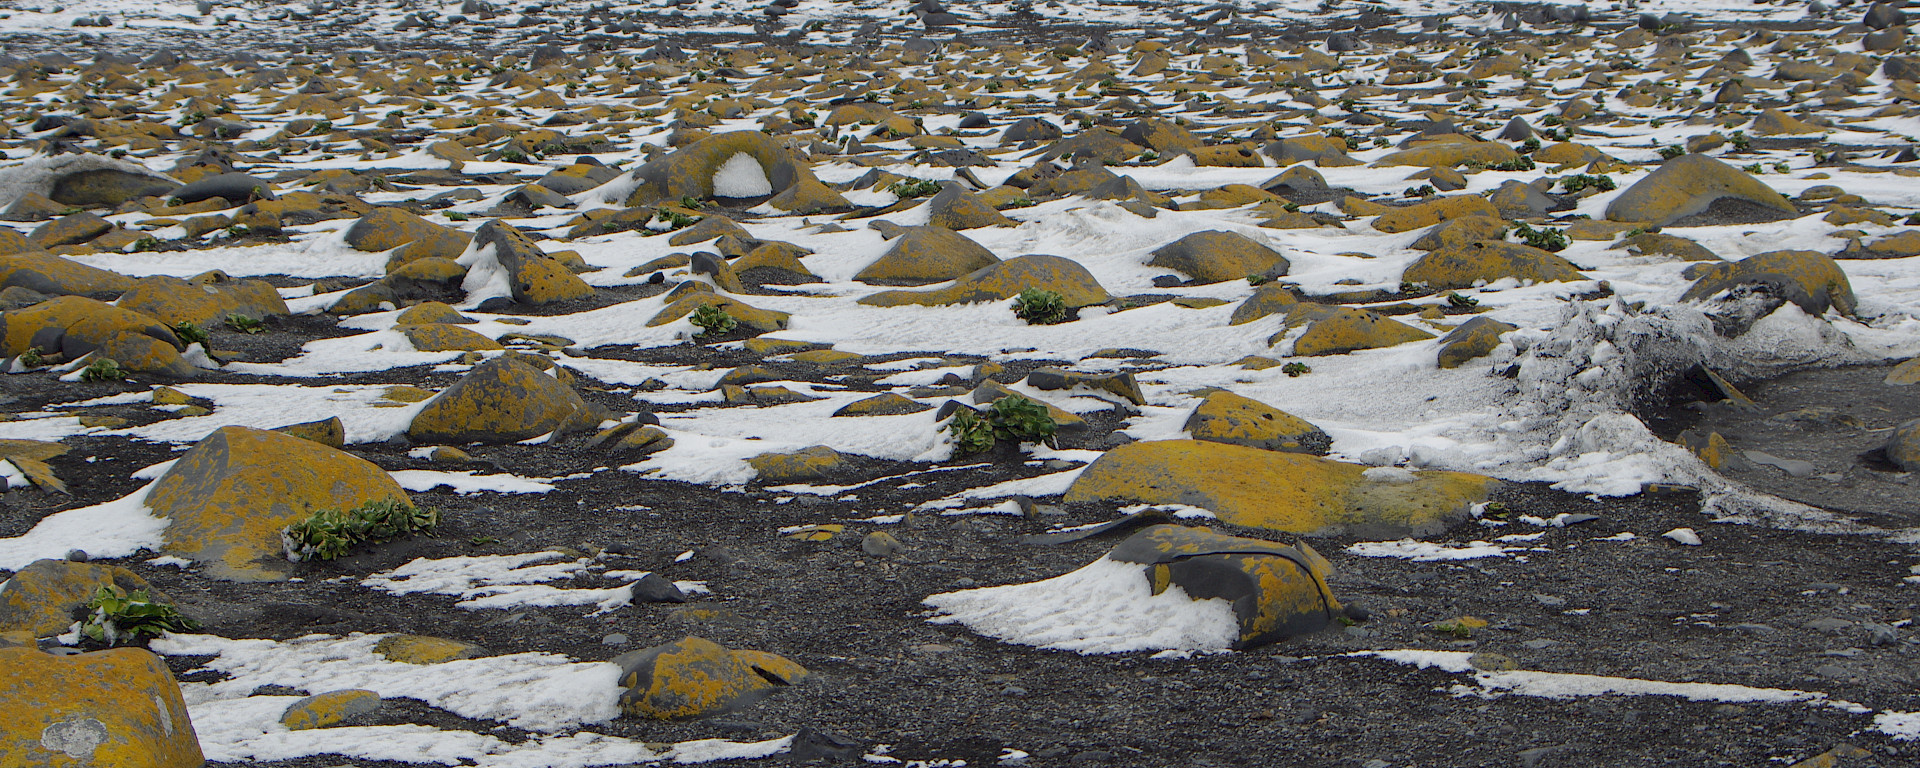 Lichen covered ventifacts on Heard Island.